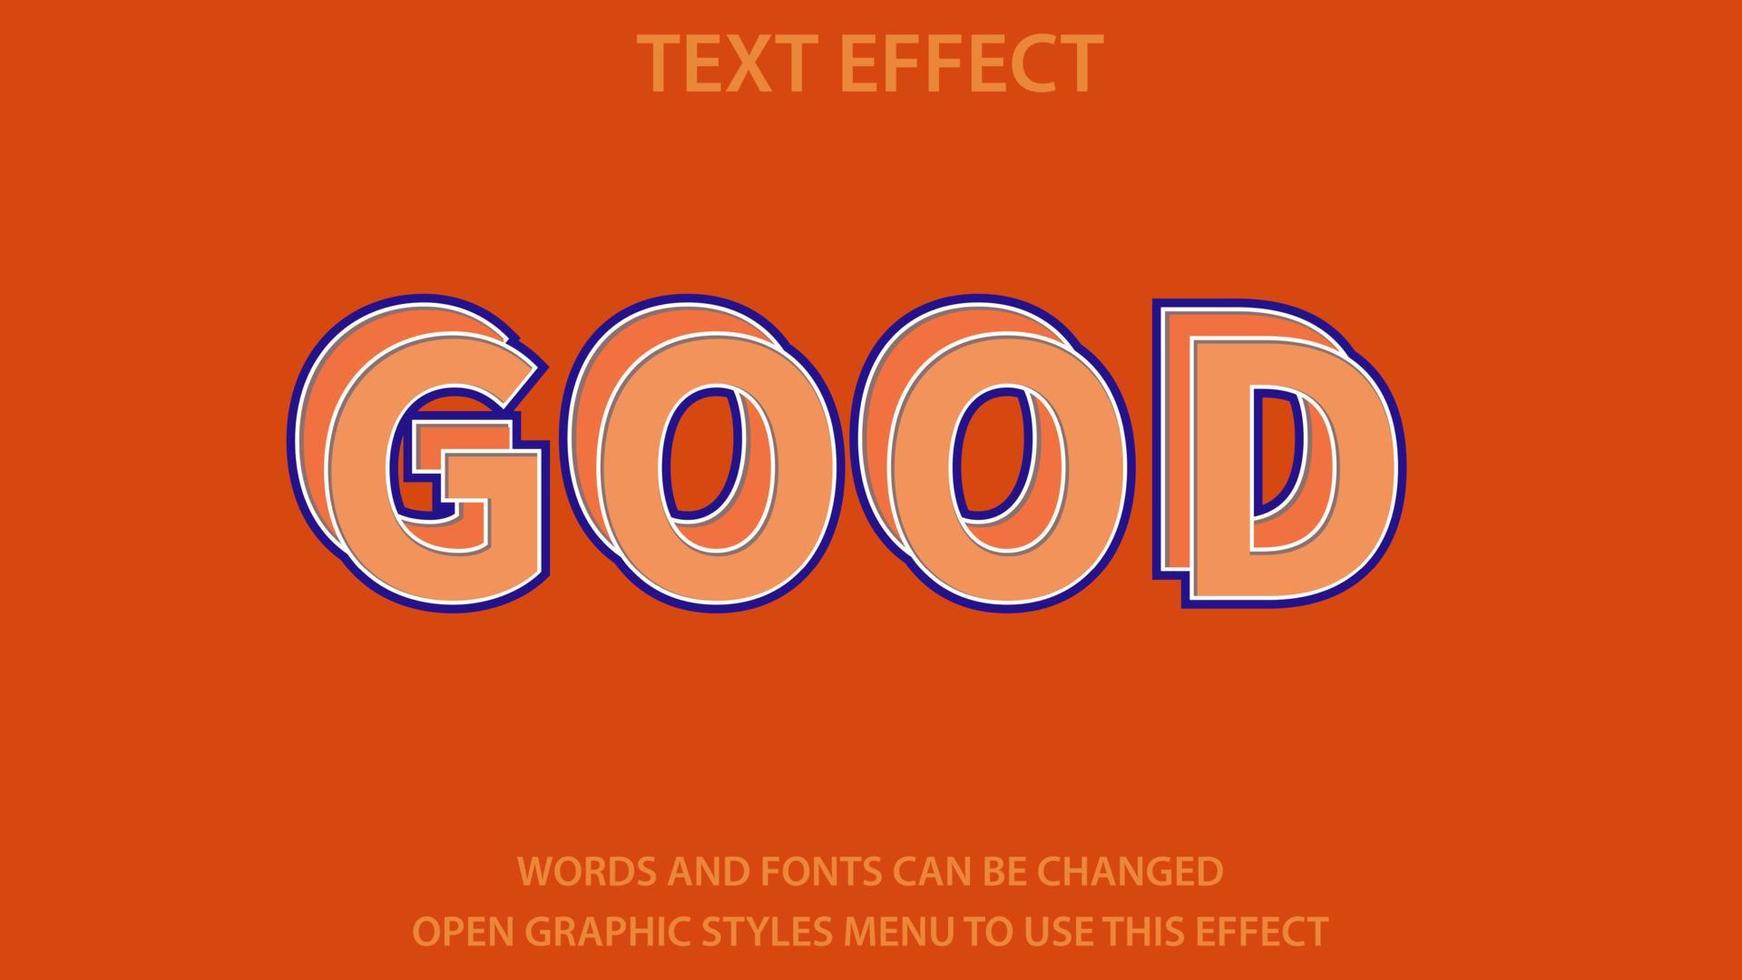 good text effect. Vector illustration. Editable